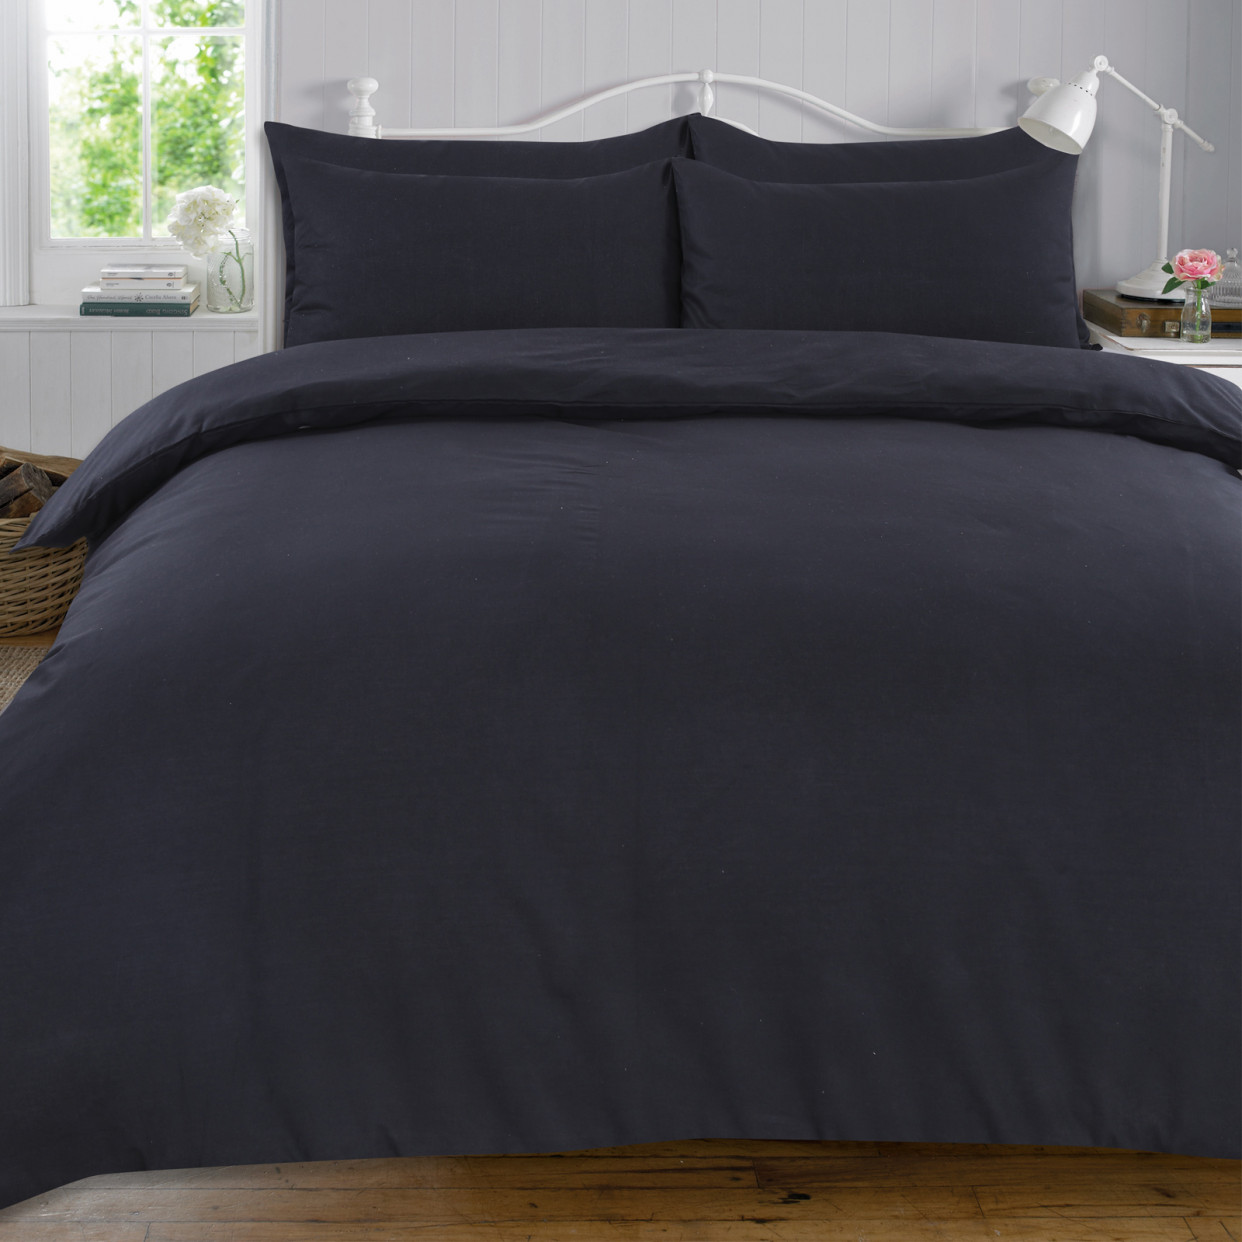 Highams Plain 100% Cotton Duvet Cover with Pillow Case Bedding Set, Black - King>